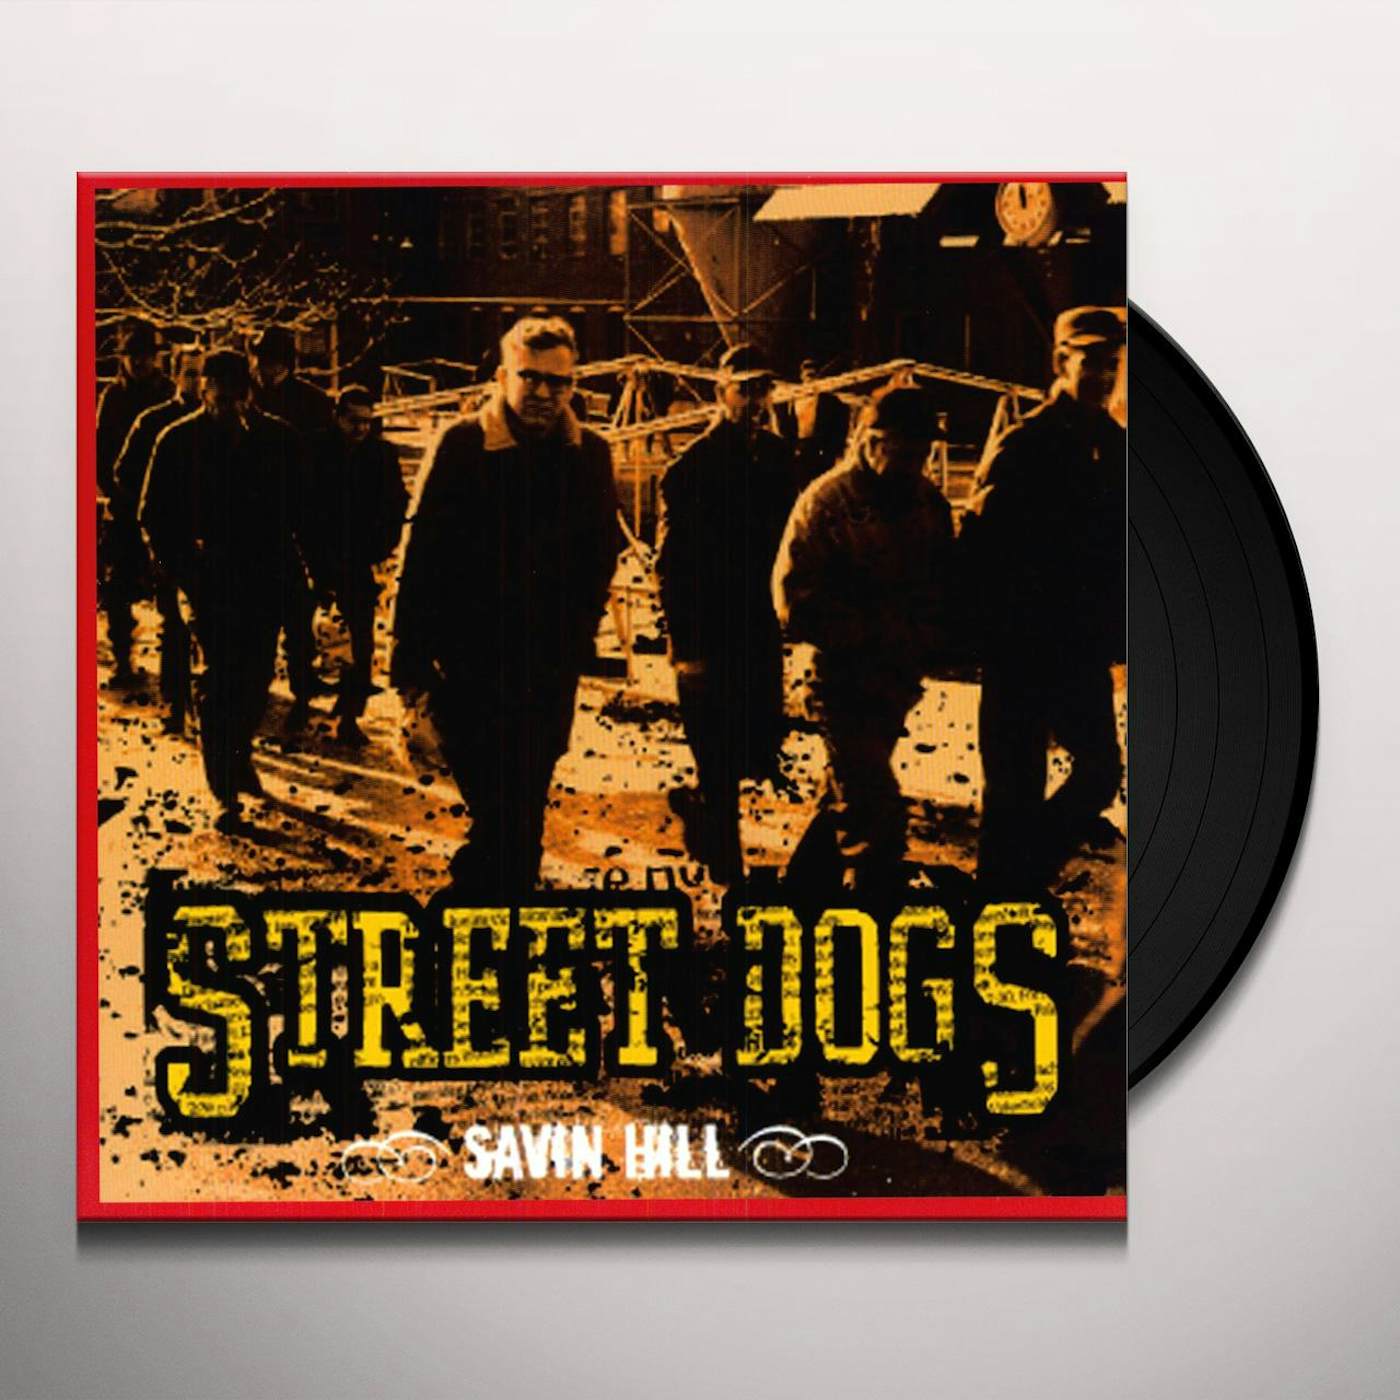 Street Dogs Savin Hill Vinyl Record